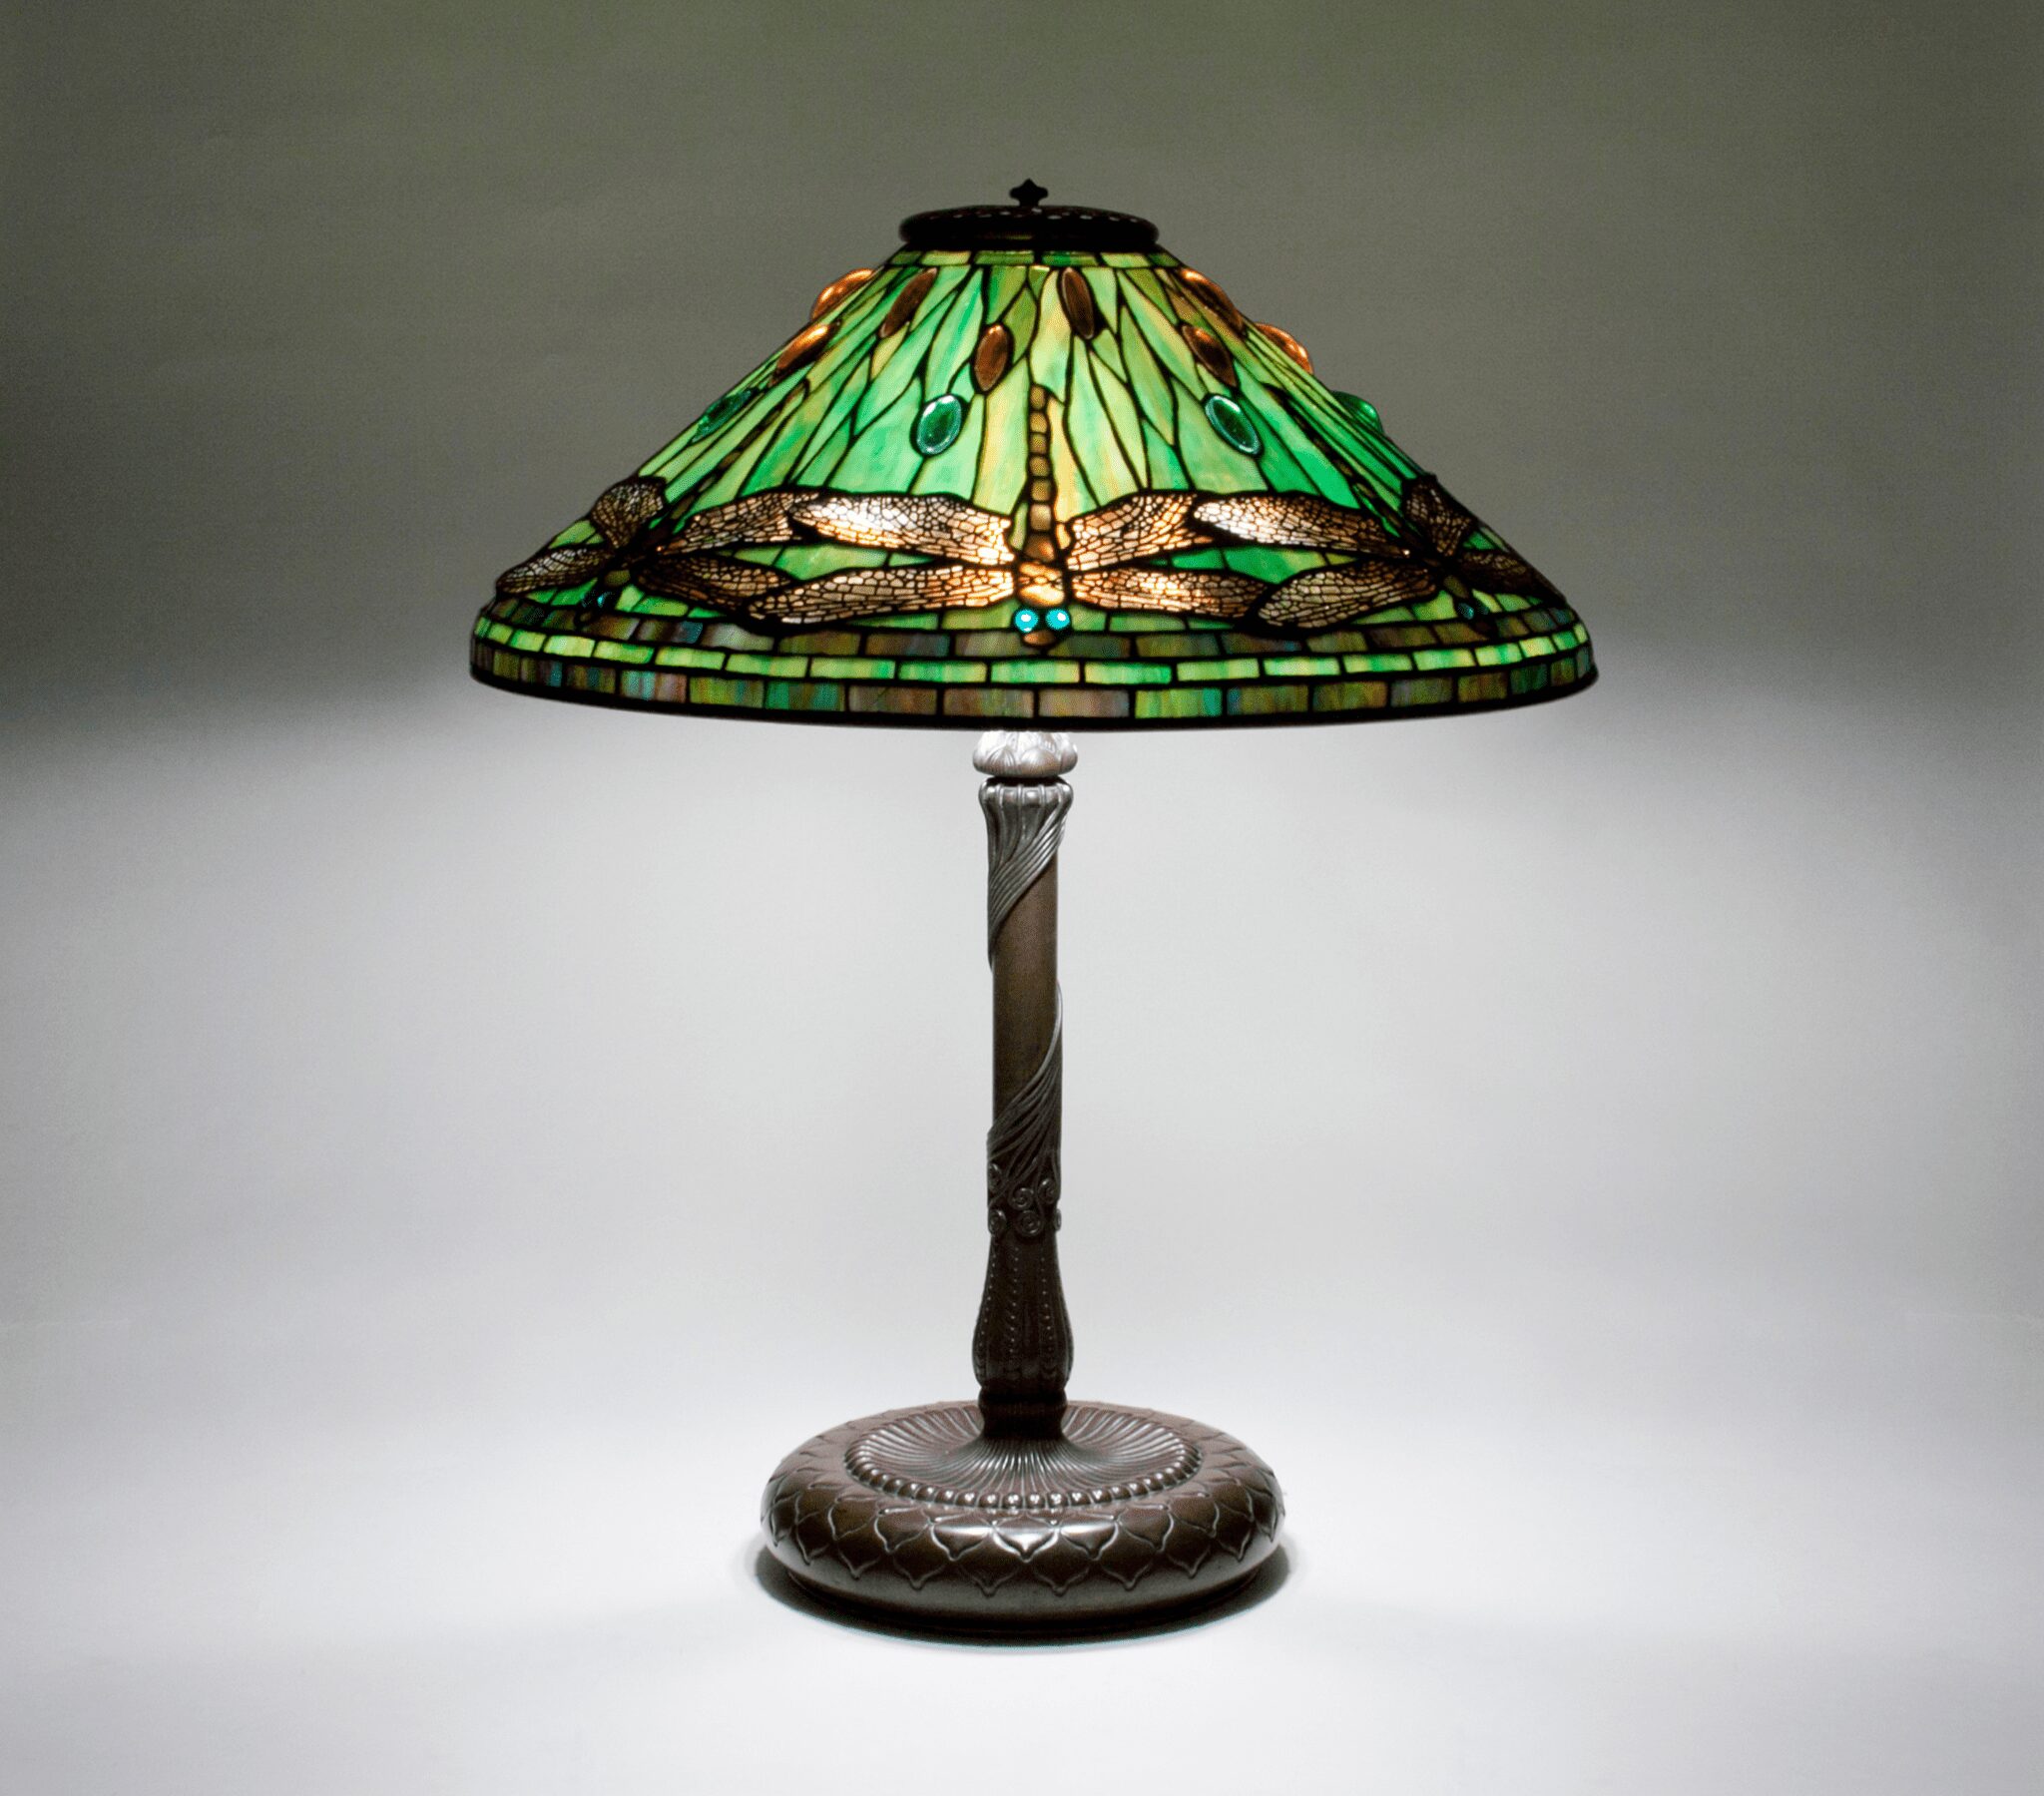 1906 - Louis Comfort Tiffany - Dragonfly  Art glass lamp, Tiffany  inspired lamps, Stained glass lamps